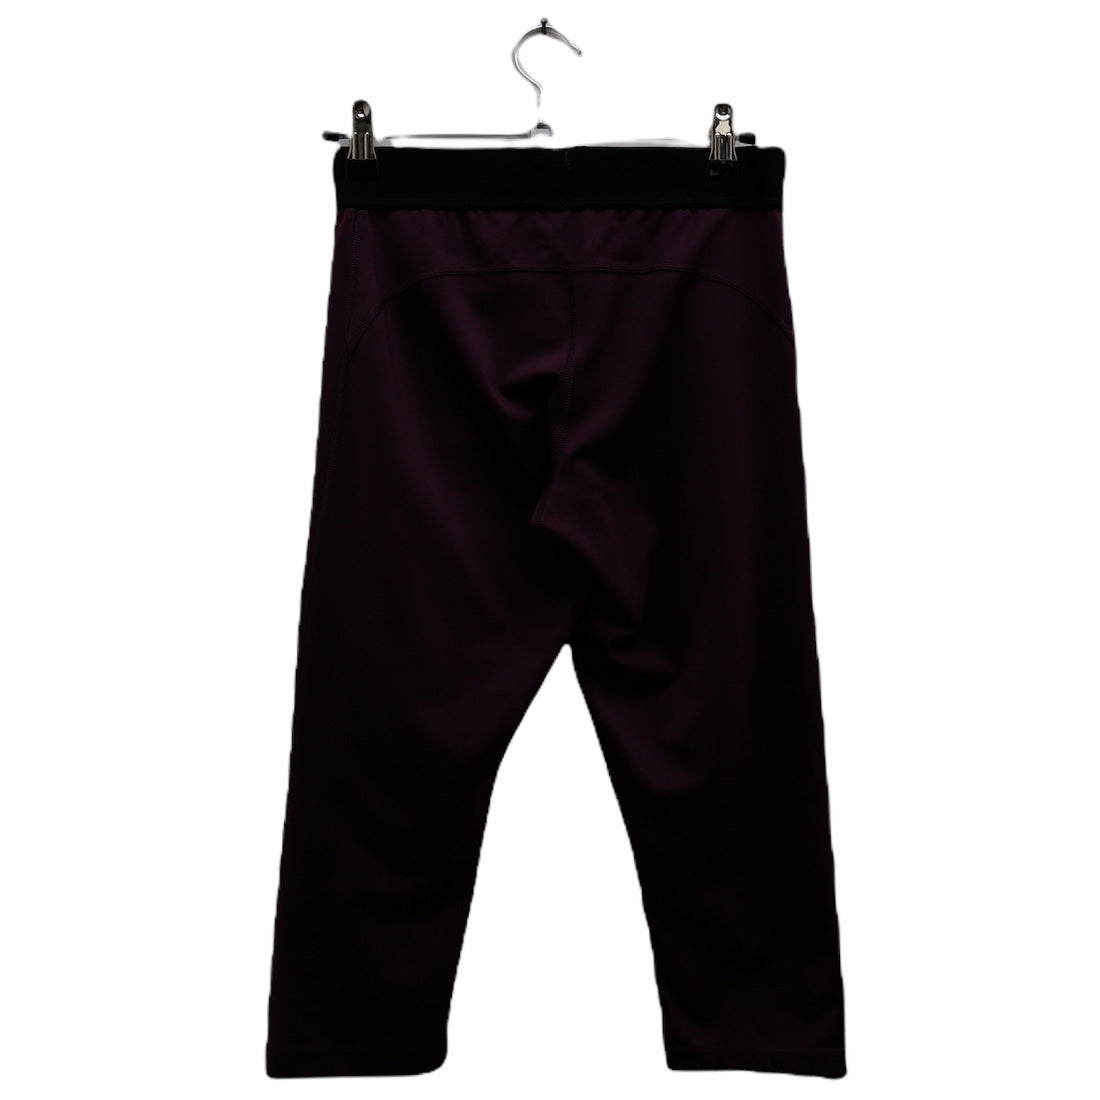 Adidas Girls Retro Floral Capri Leggings Black XL(16) Training Pant  AeroReady | eBay